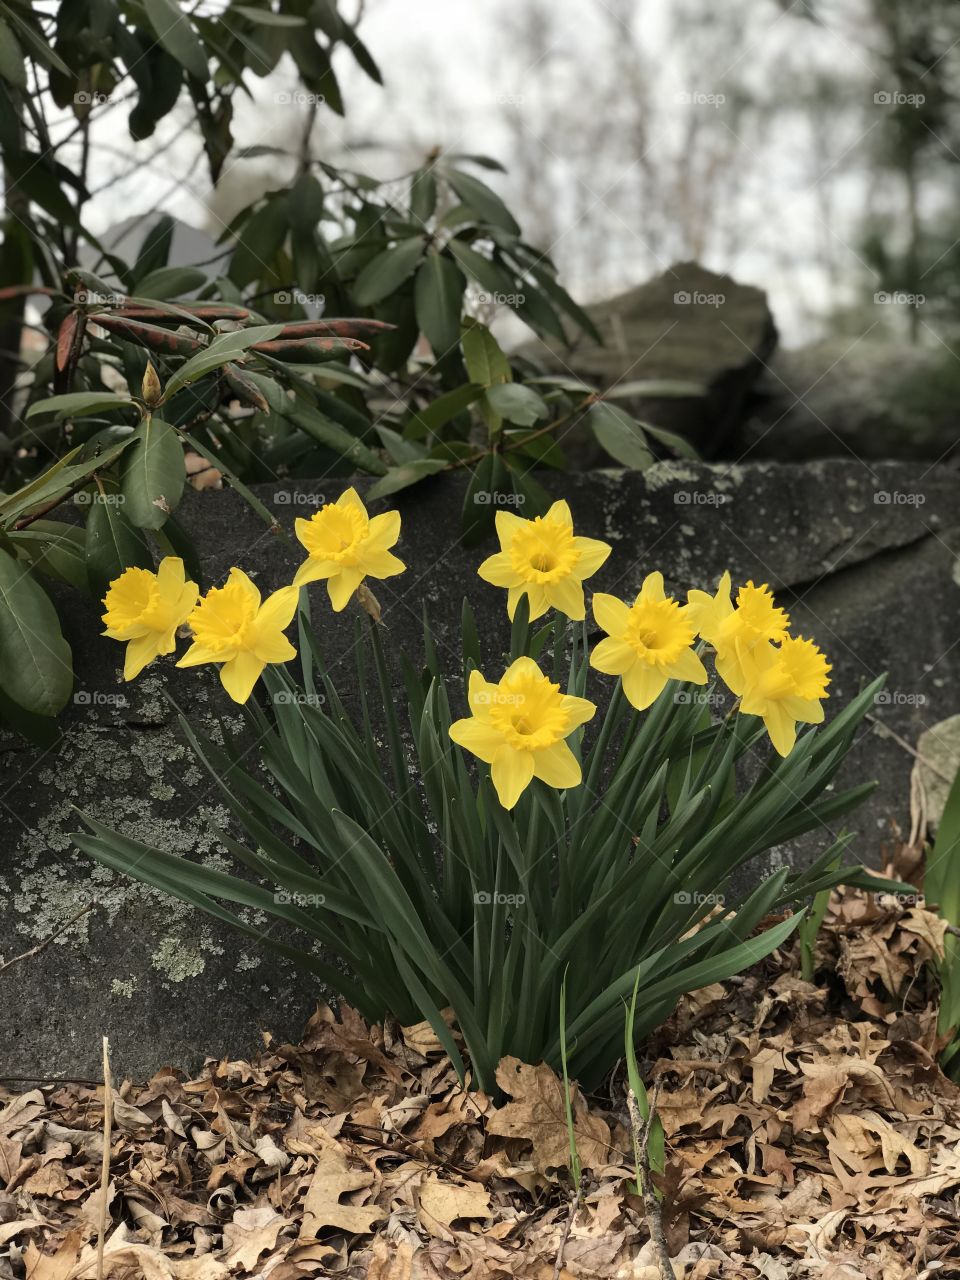 Finally Spring Daffodils!